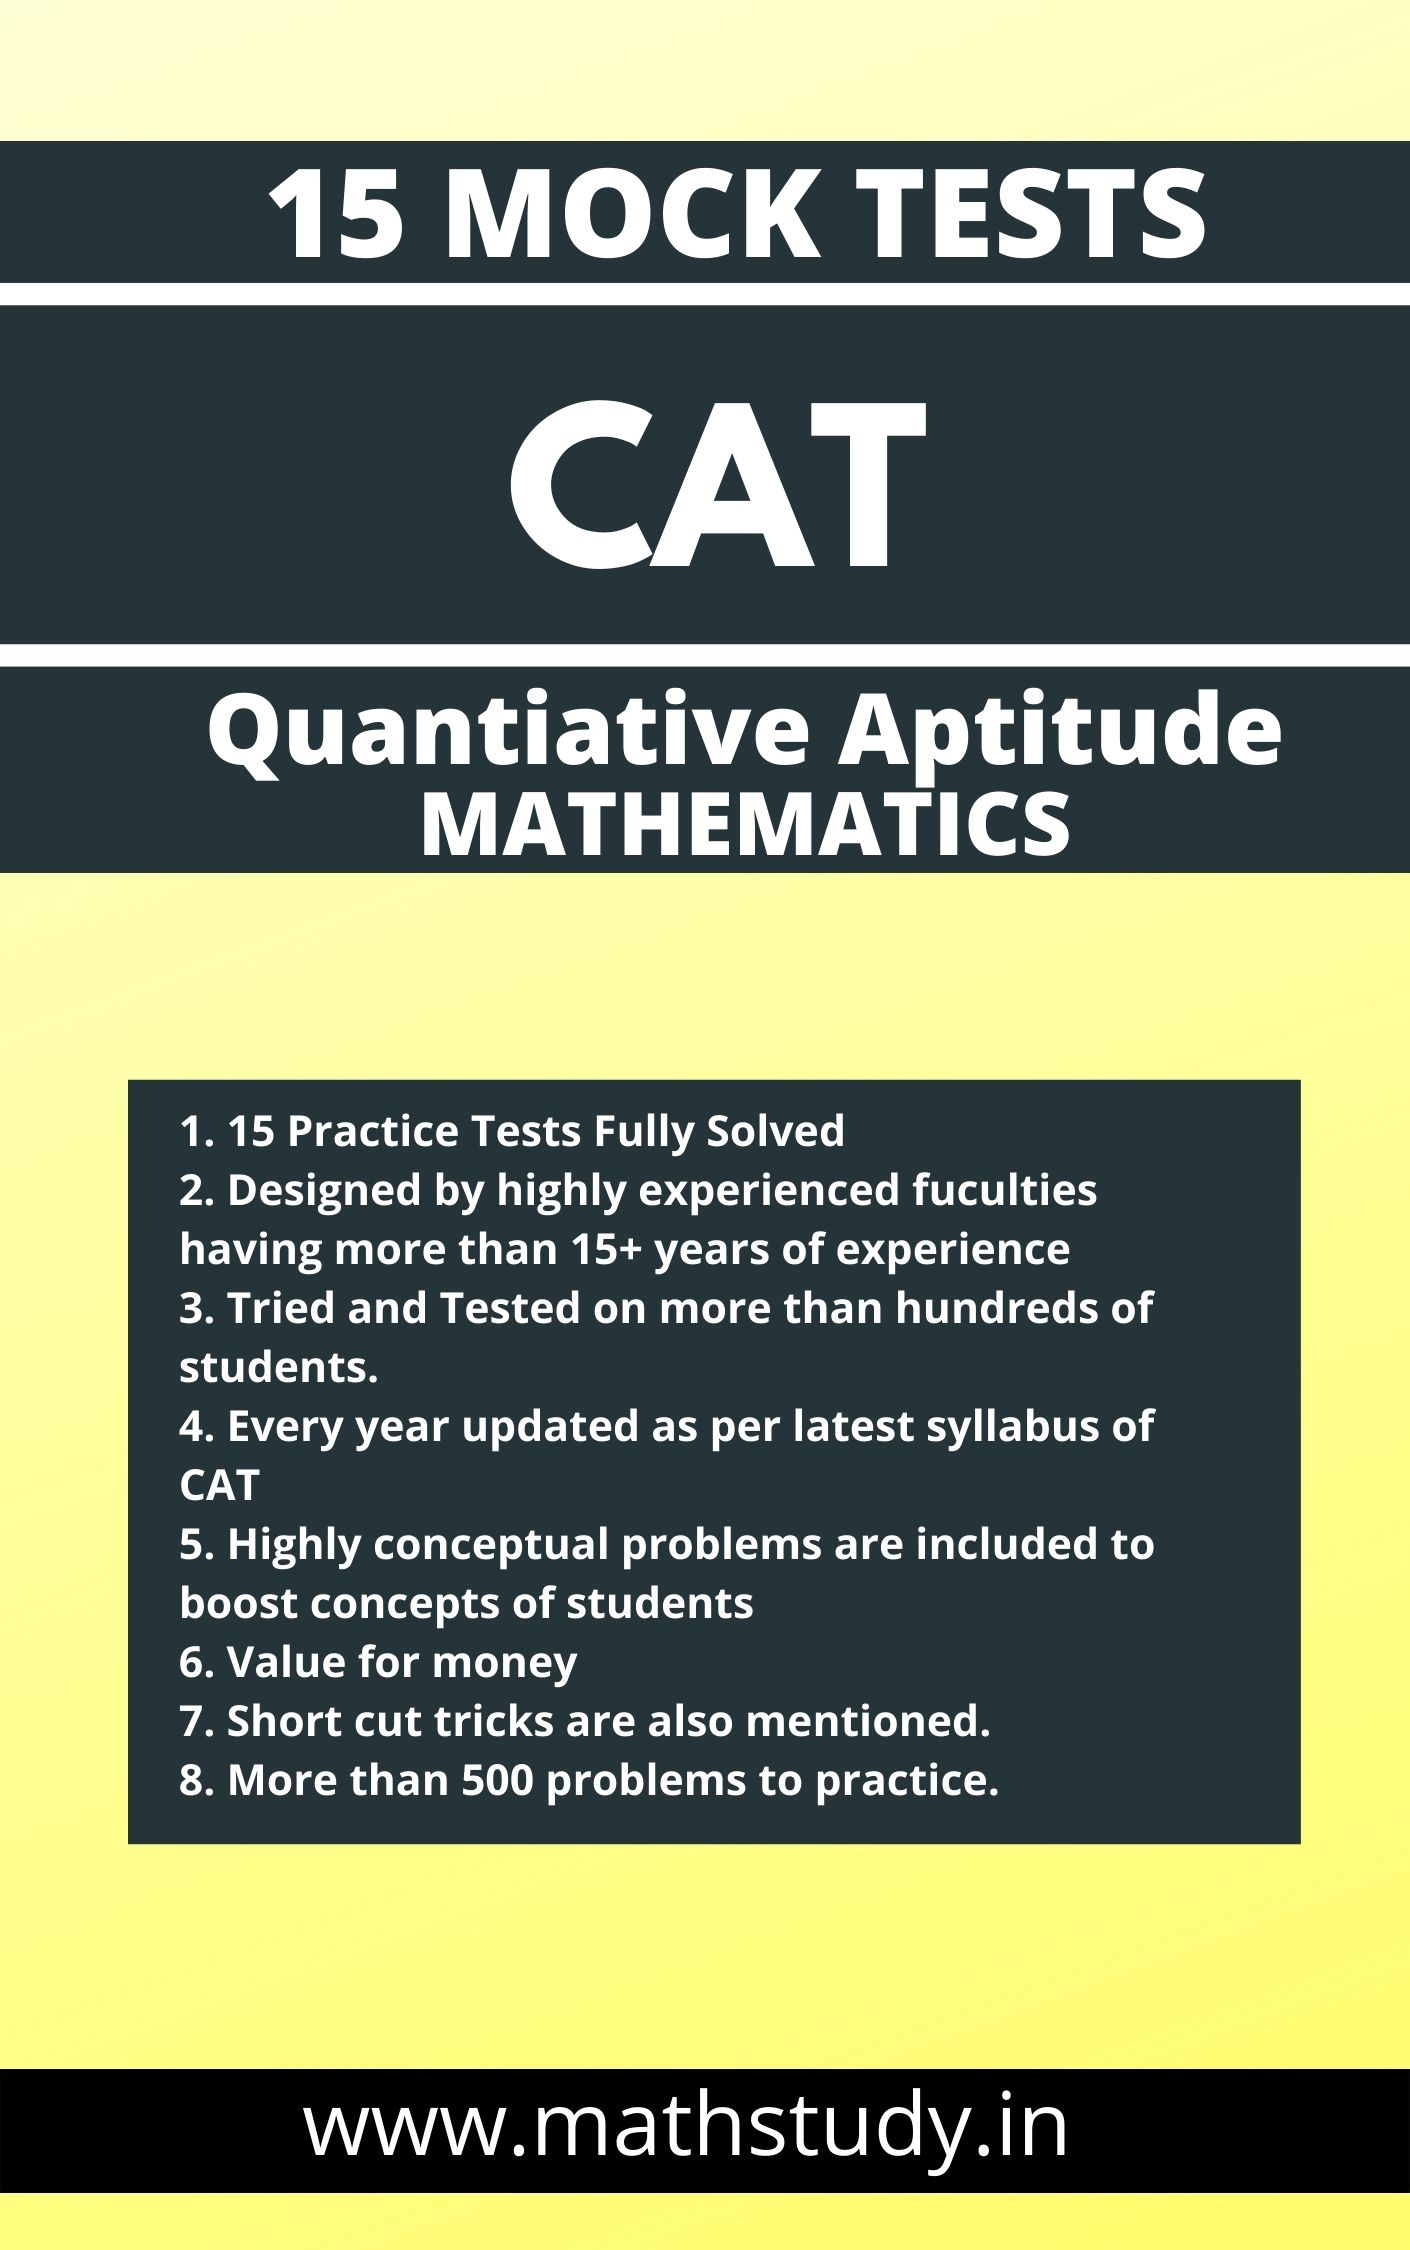 CAT Mock tests pdf